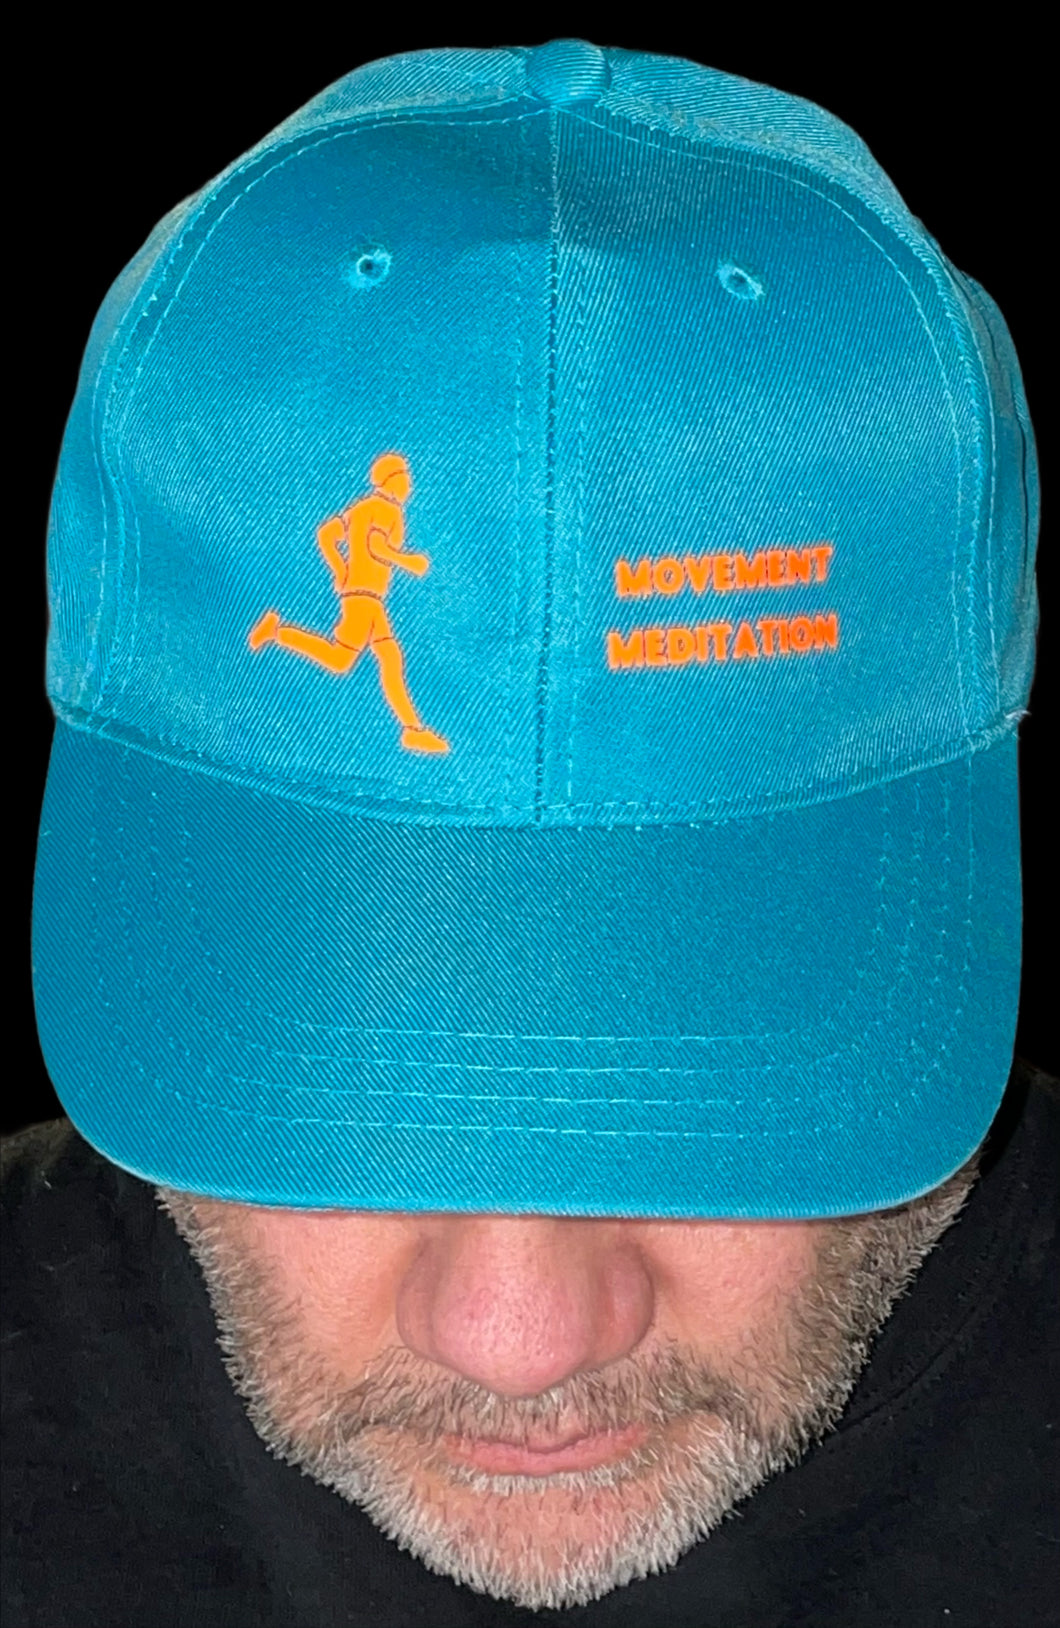 Turquoise movement Meditation cap